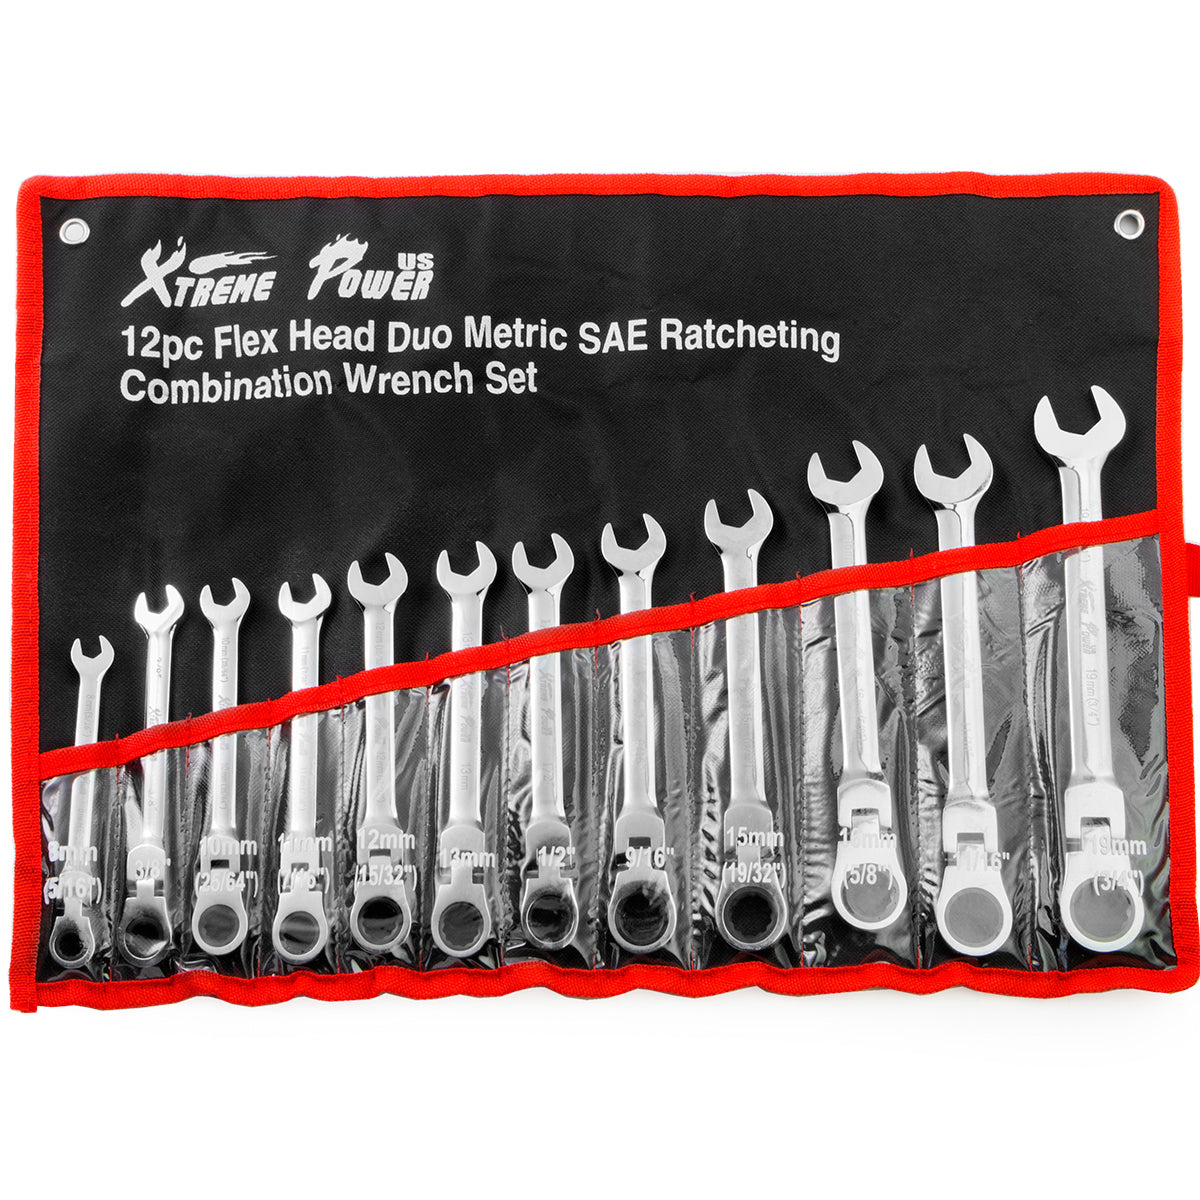 12pcs Flex-Head Combination Wrench Set Ratcheting Duo Metric SAE –  XtremepowerUS